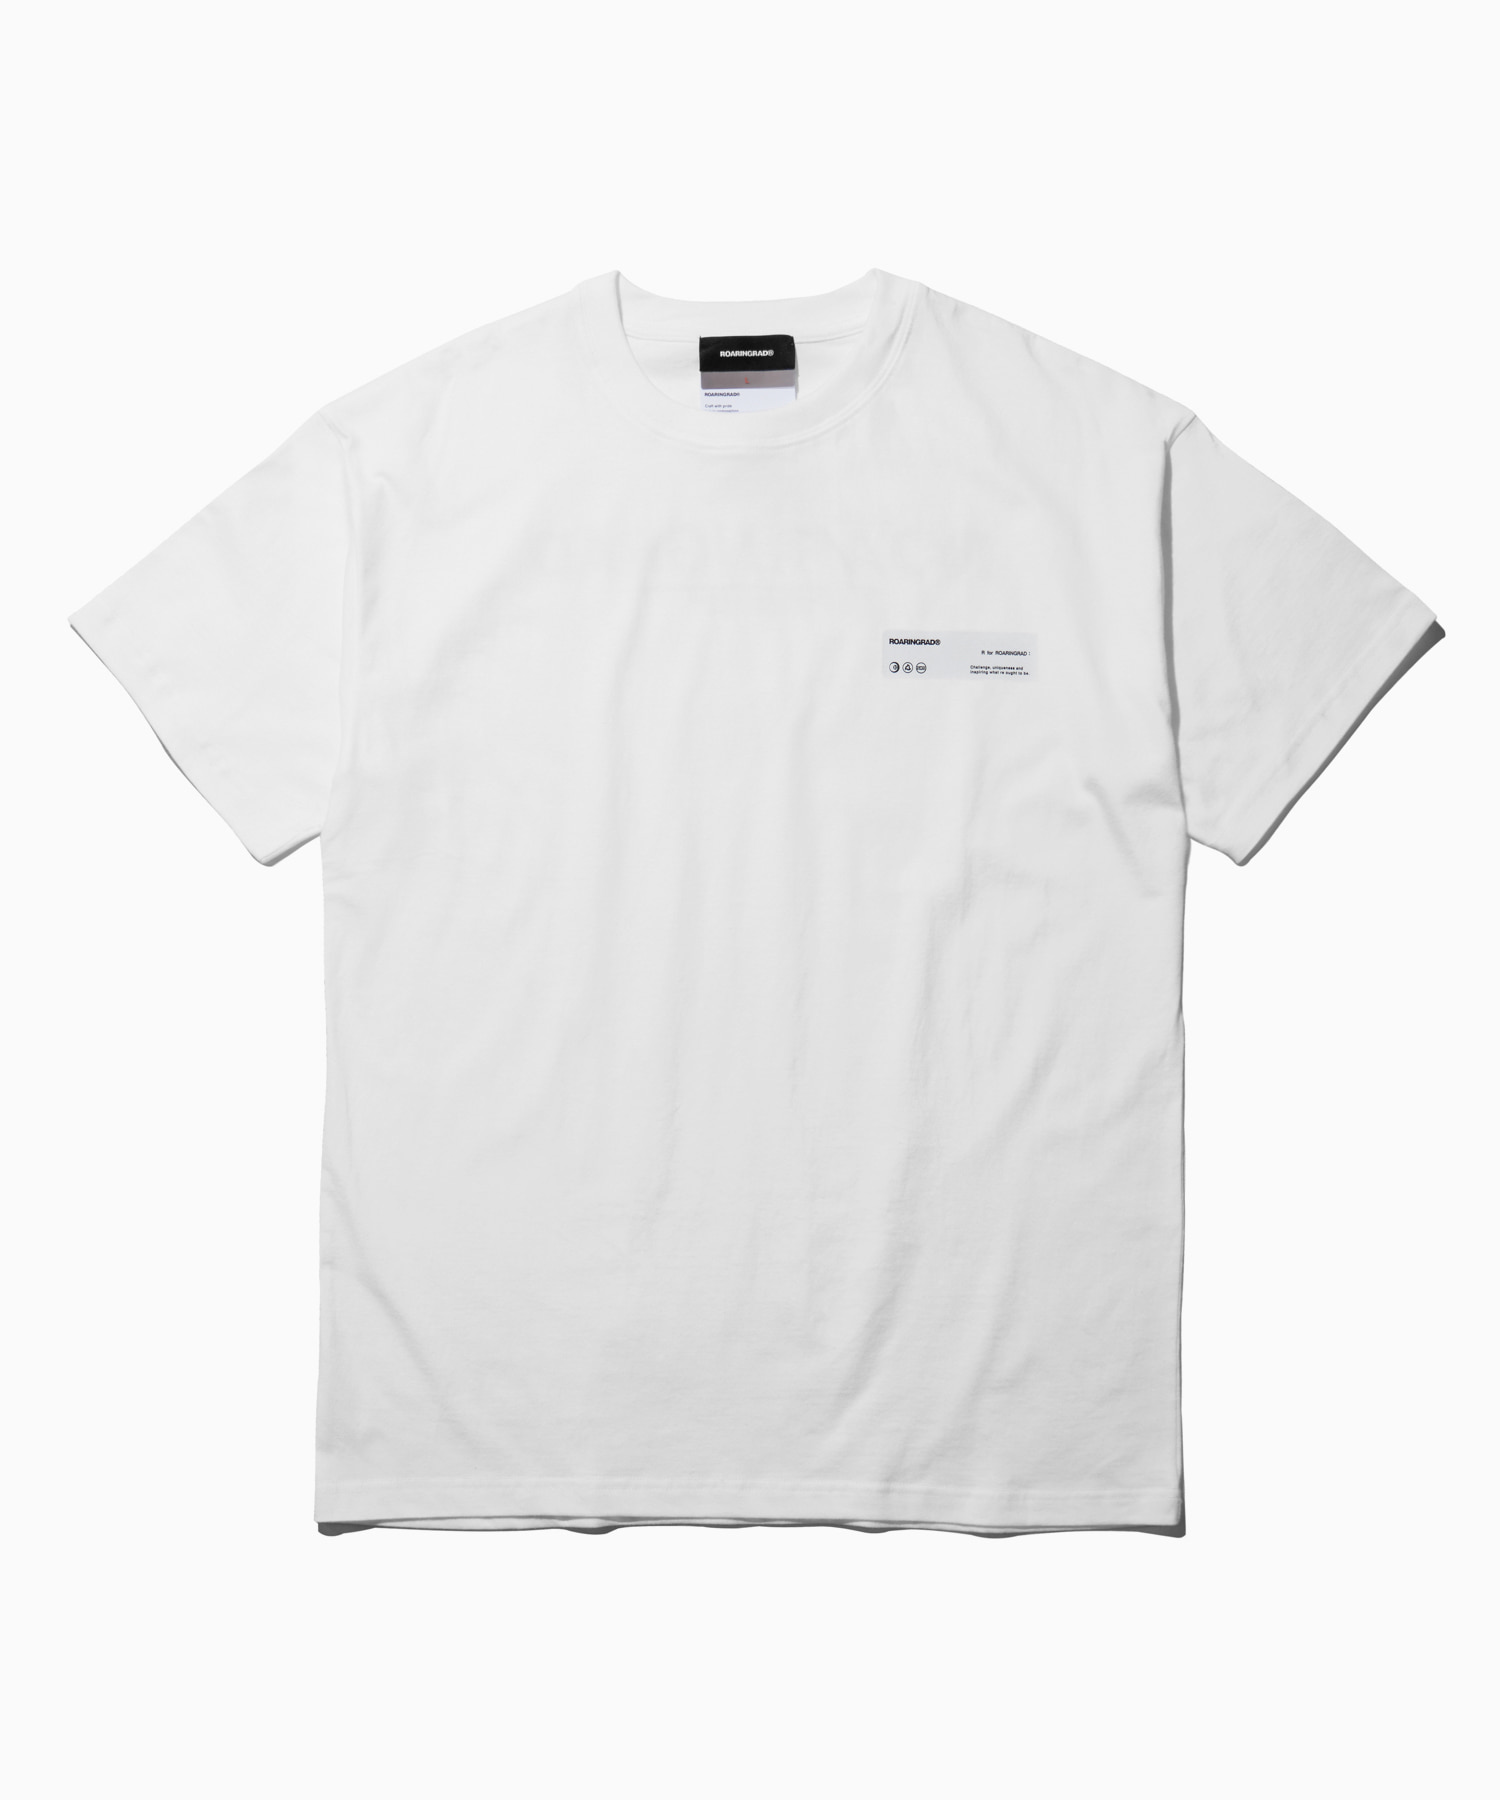 flim signature logo t-shirt white - 로어링라드(ROARINGRAD)